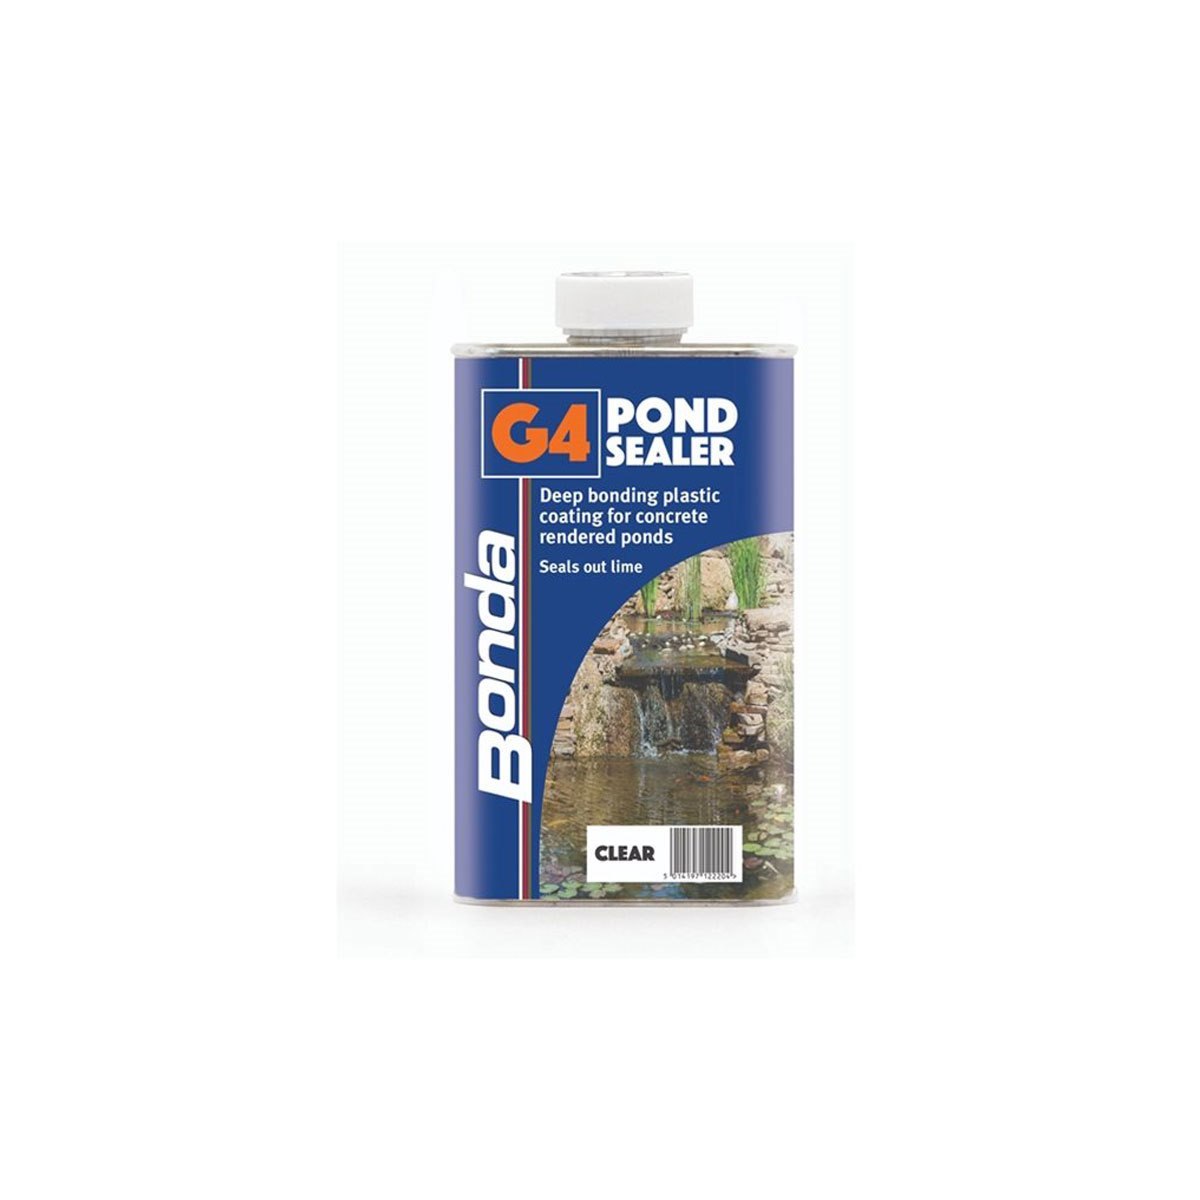 Bonda G4 Pond Sealer Clear 500g